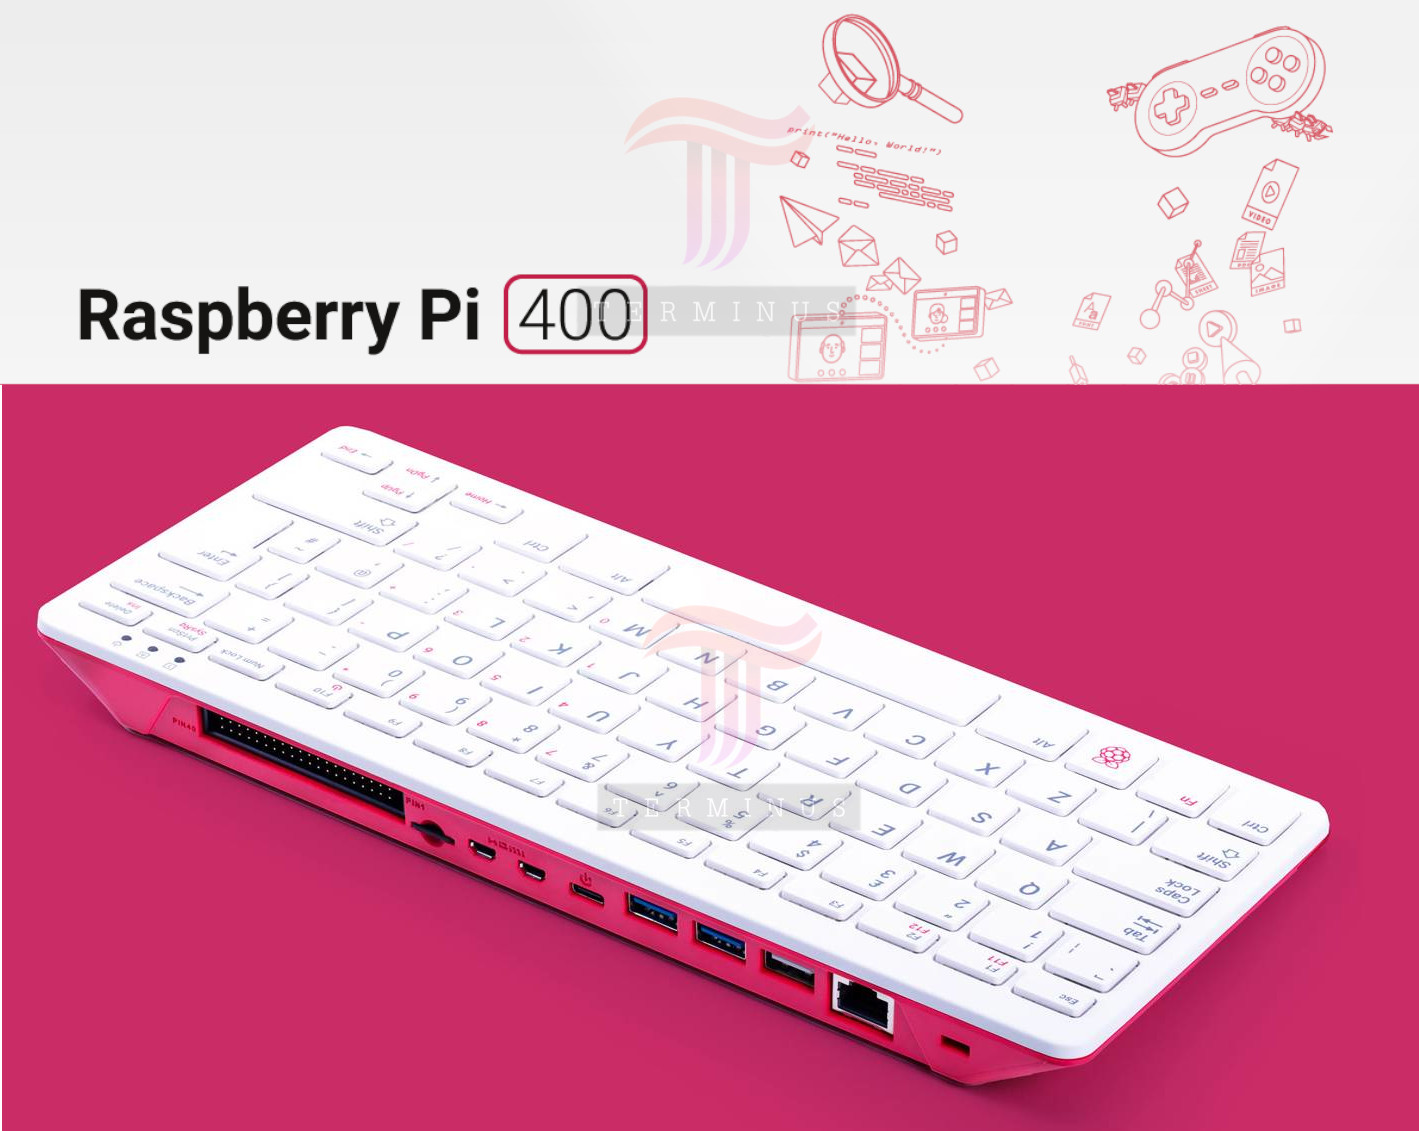 Raspberry Pi 400 (Made in UK)